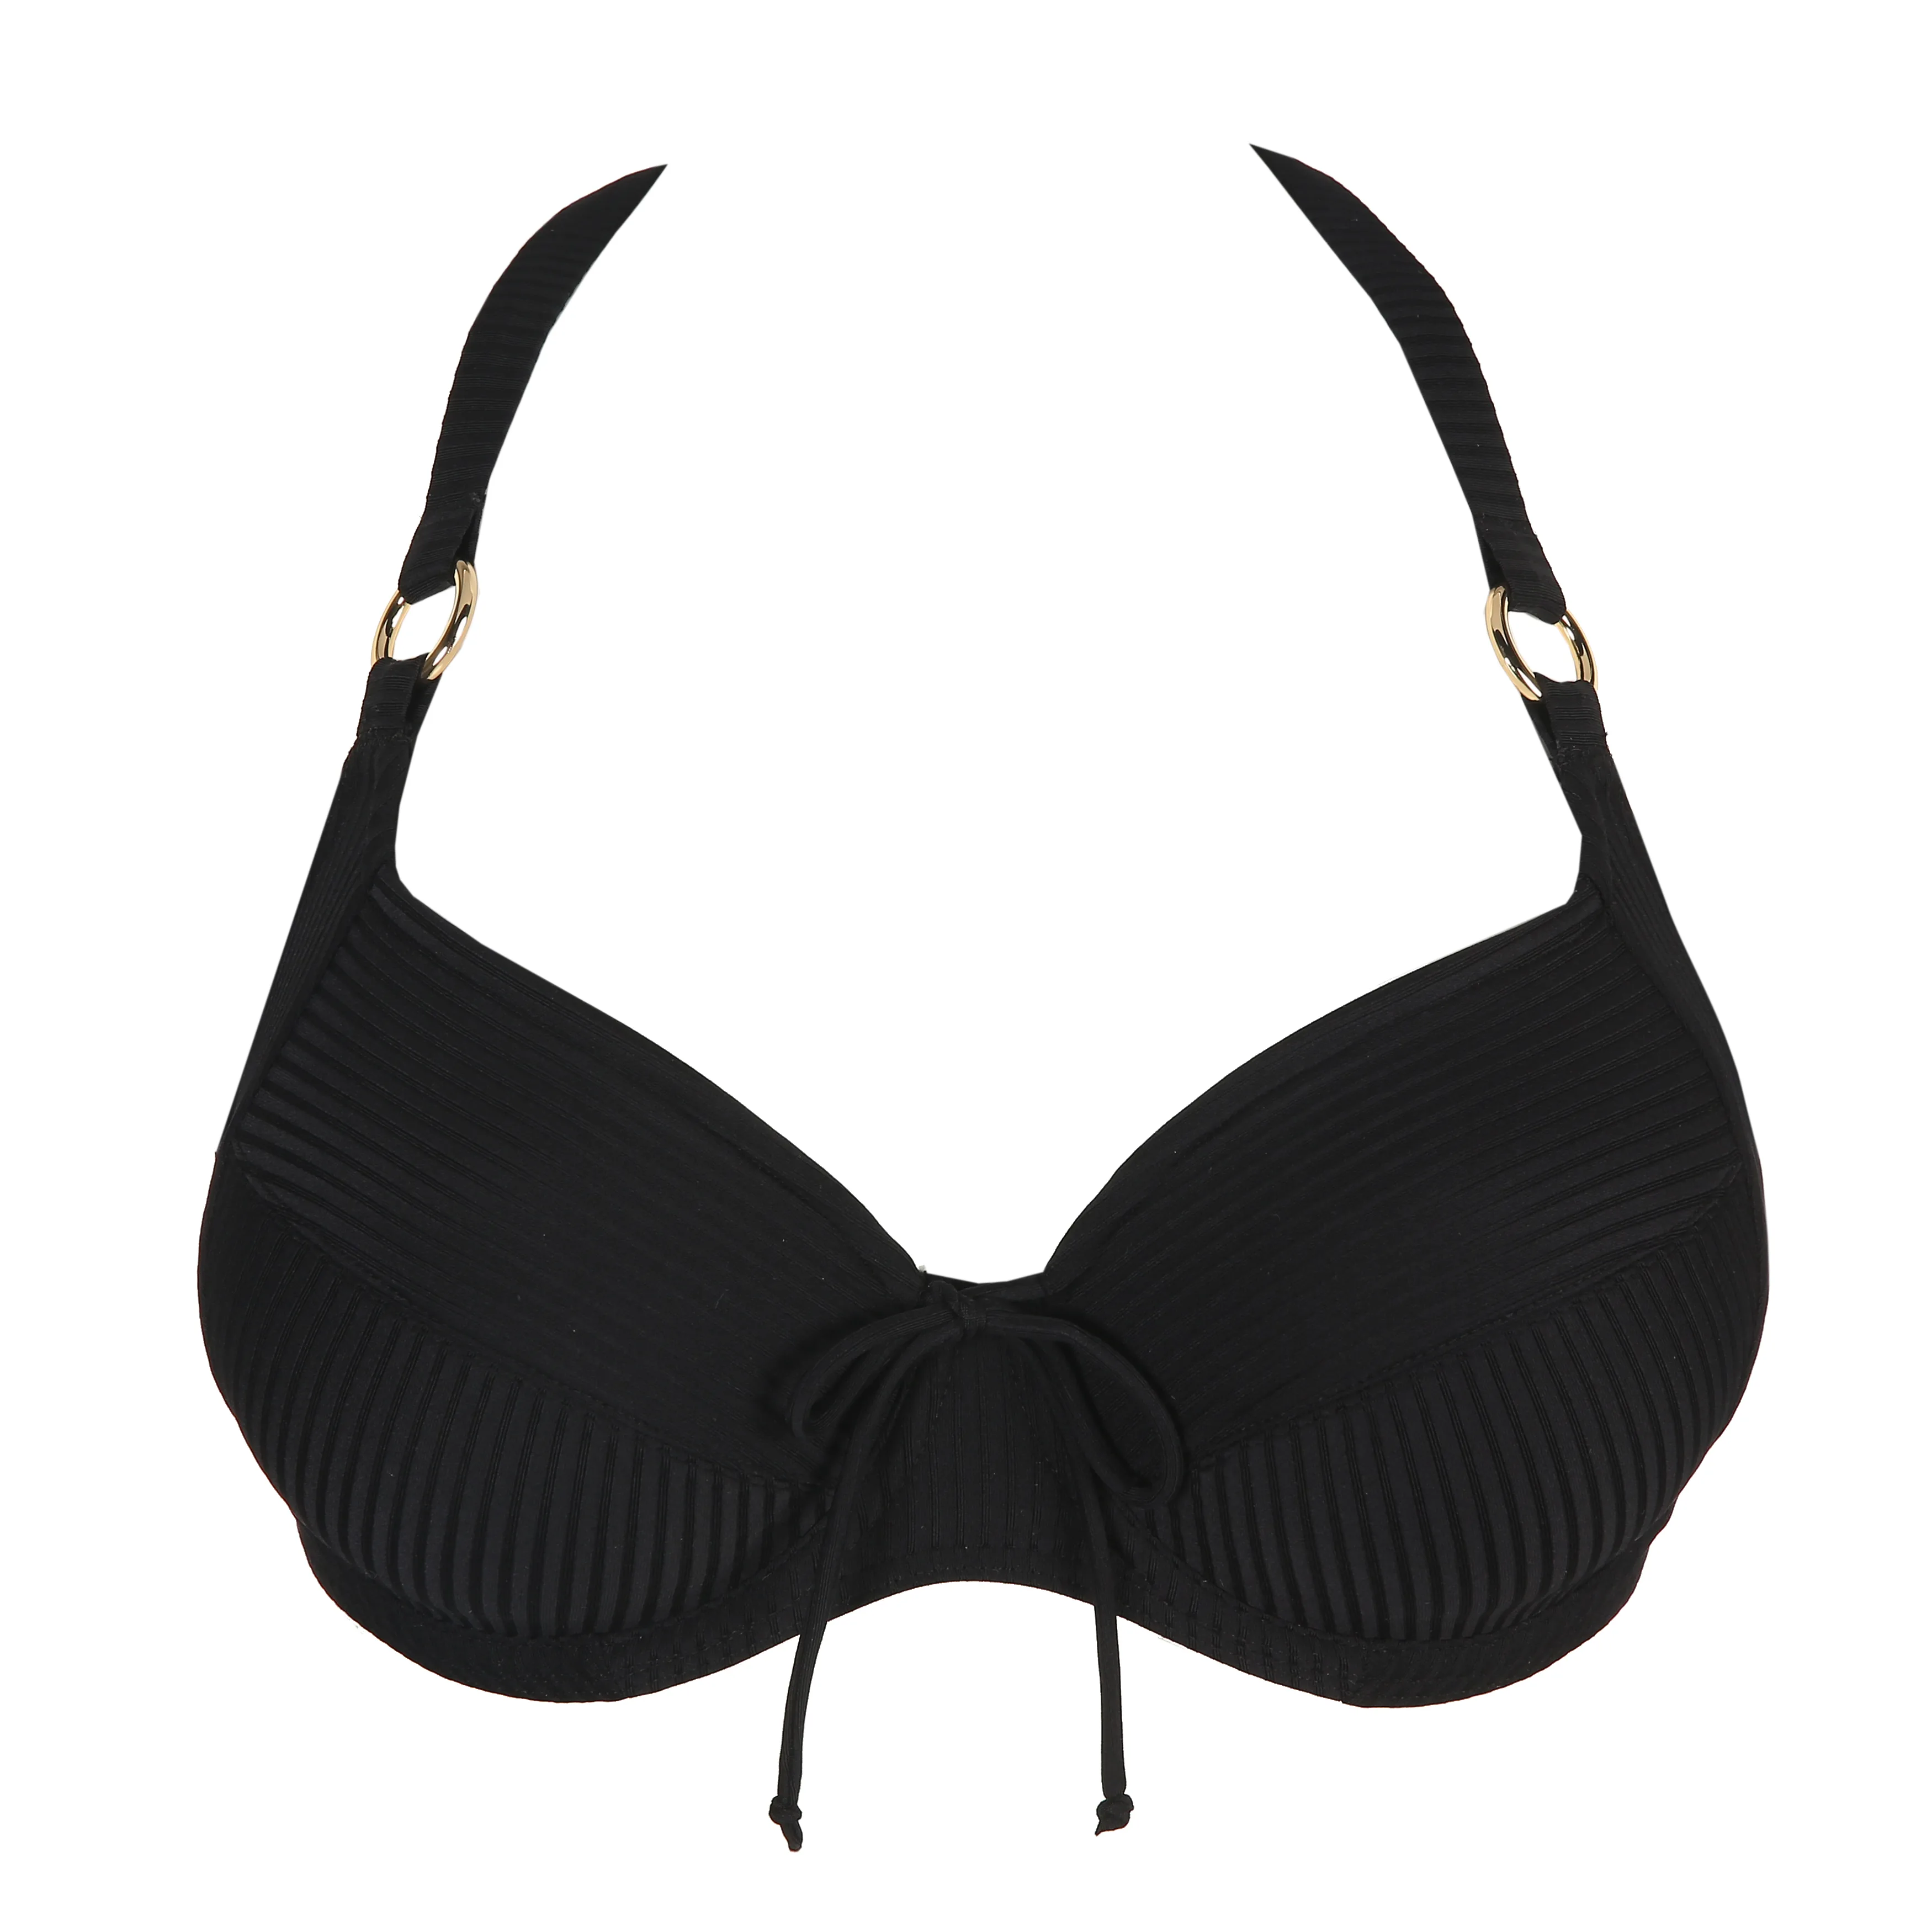 PrimaDonna Swim SAHARA Black full cup bikini top